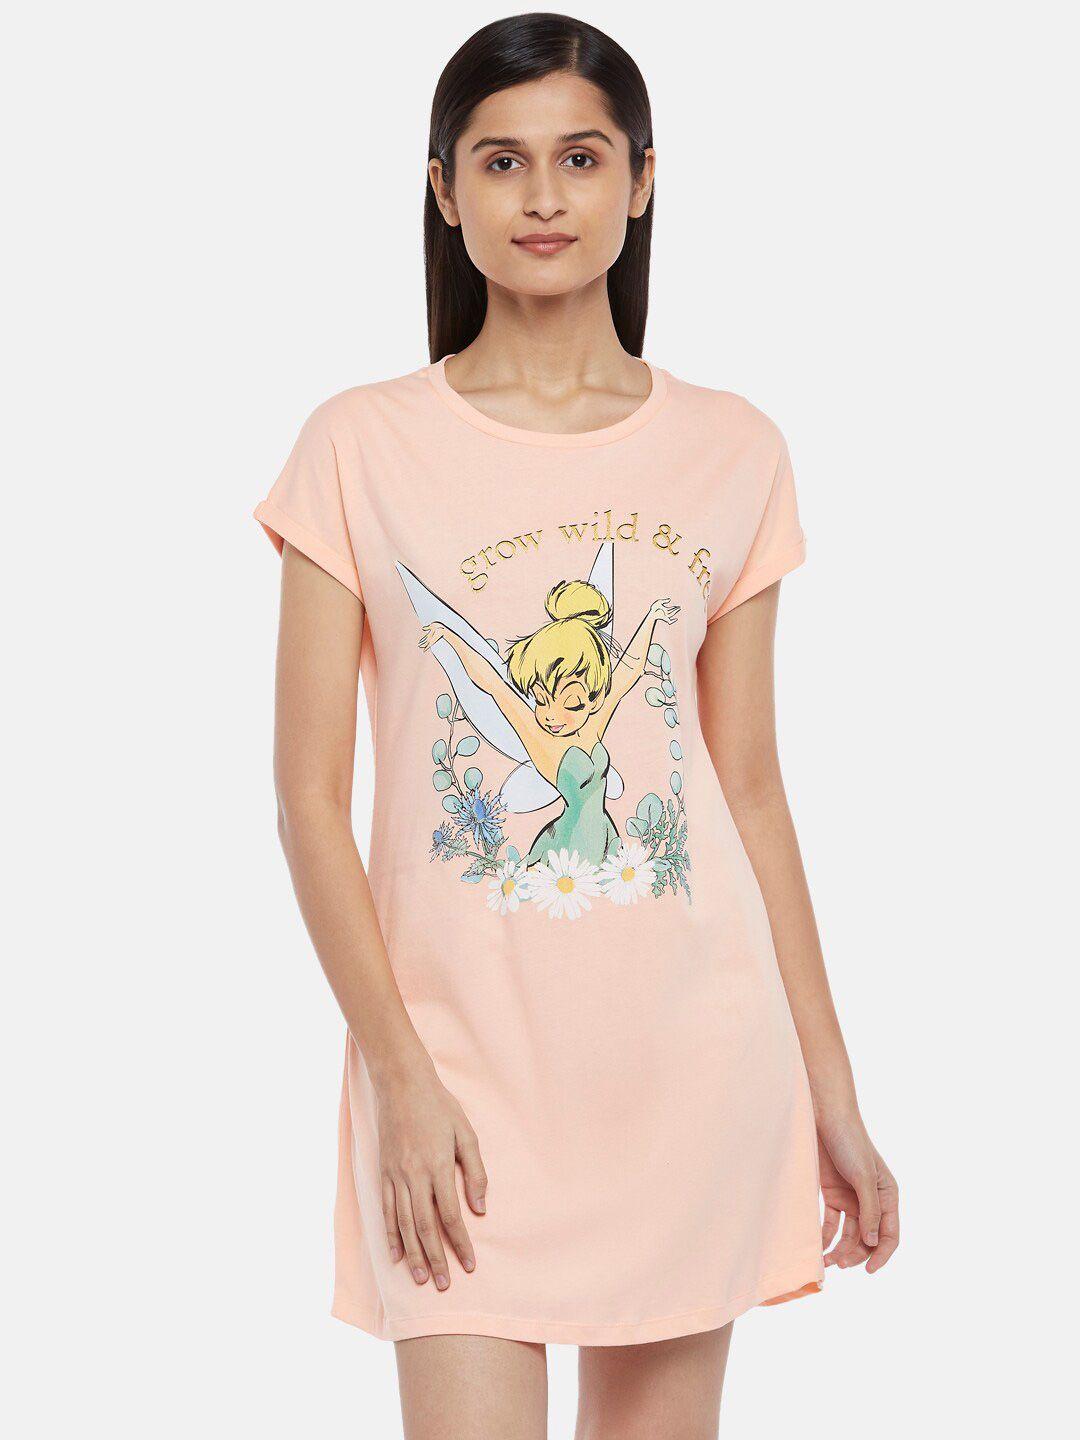 dreamz by pantaloons fairy princess printed pure cotton t-shirt nightdress